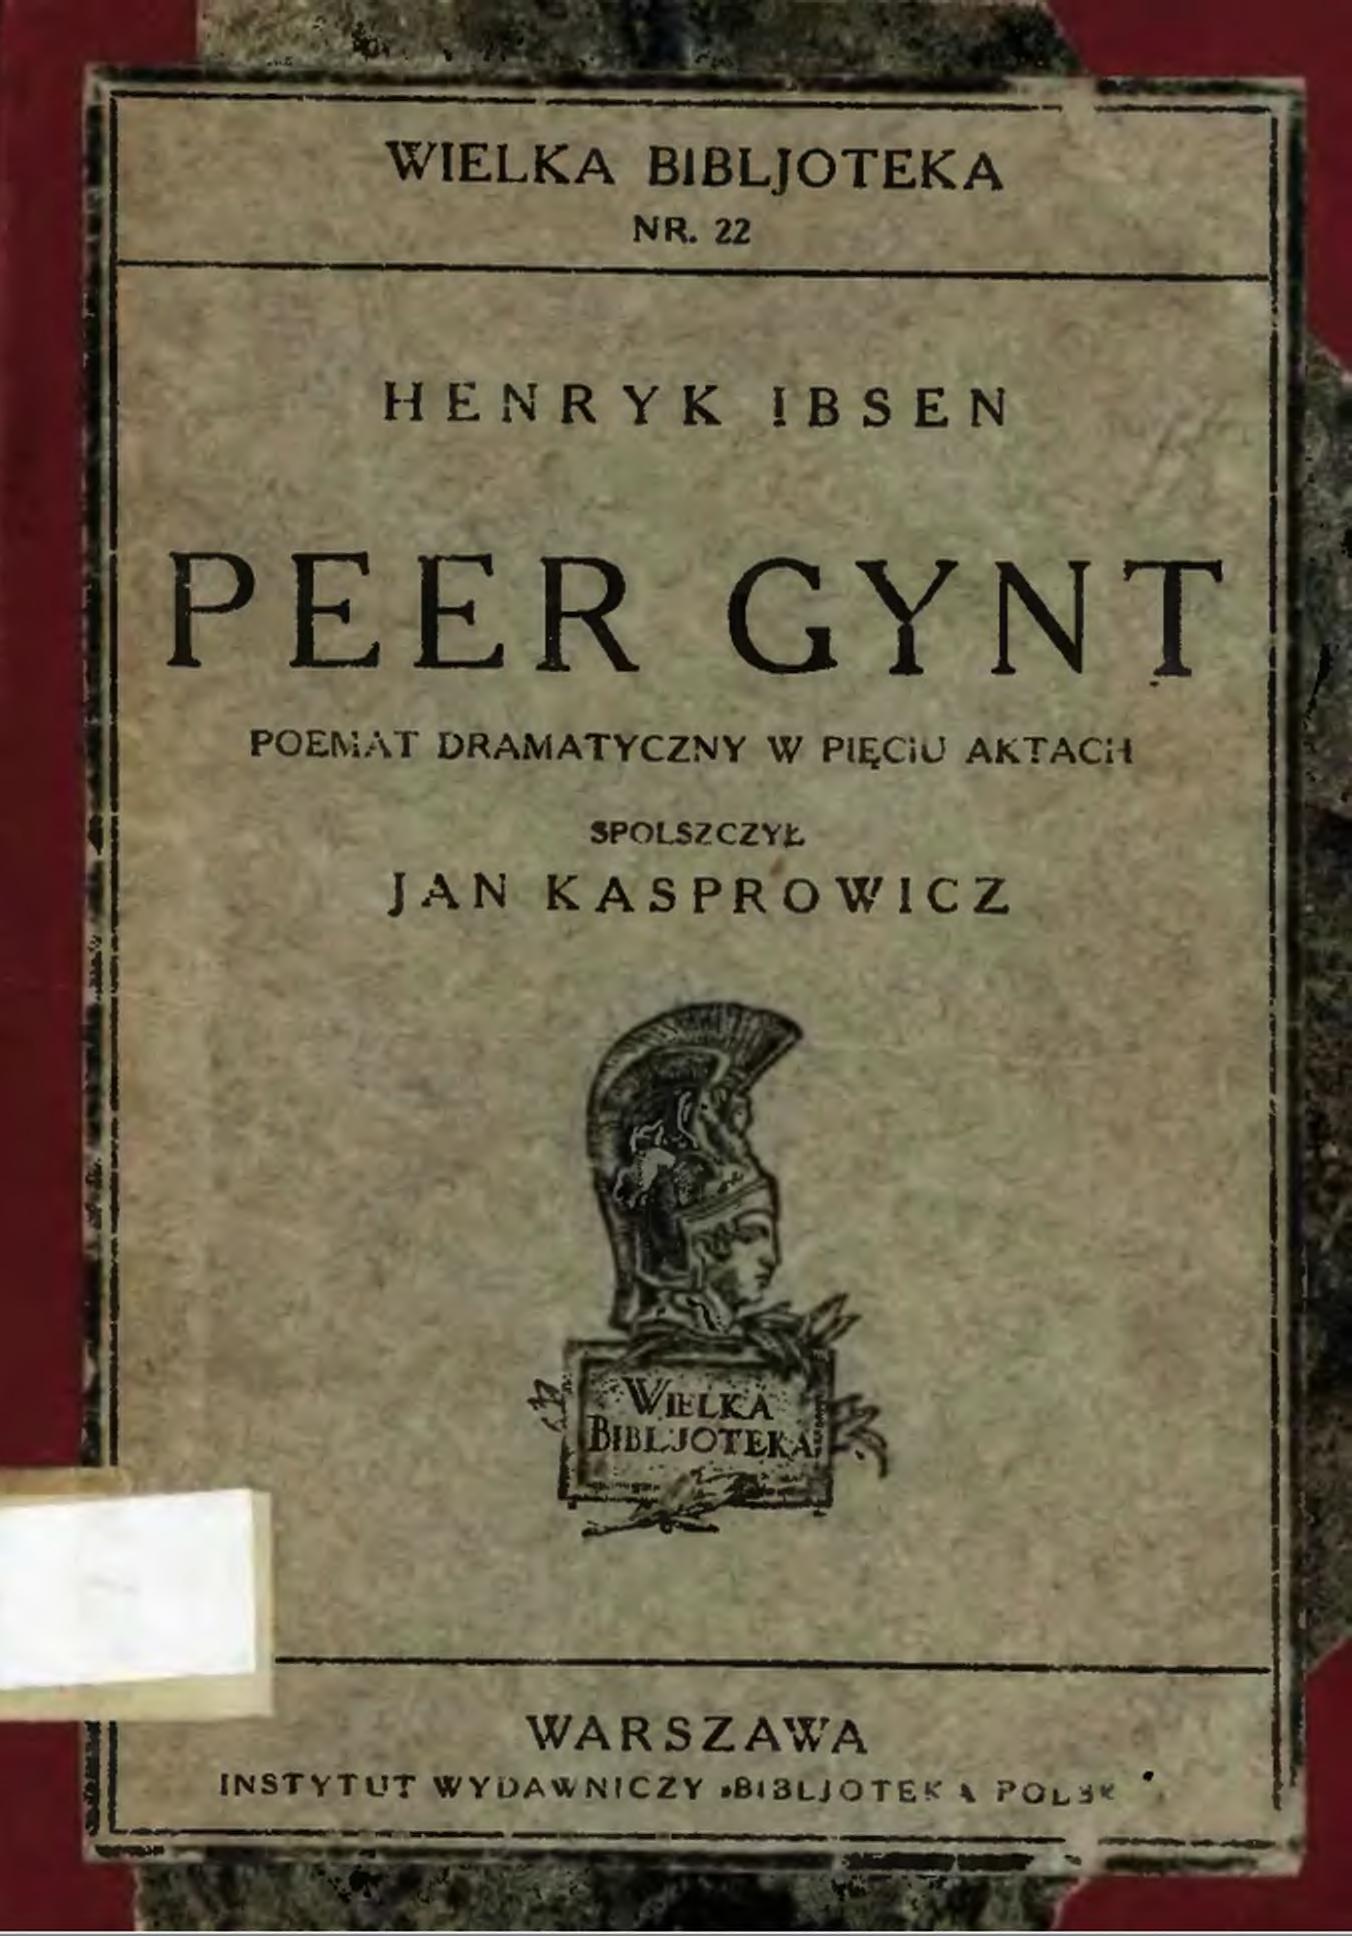 File:Henryk Ibsen - Peer Gynt.djvu - Wikimedia Commons